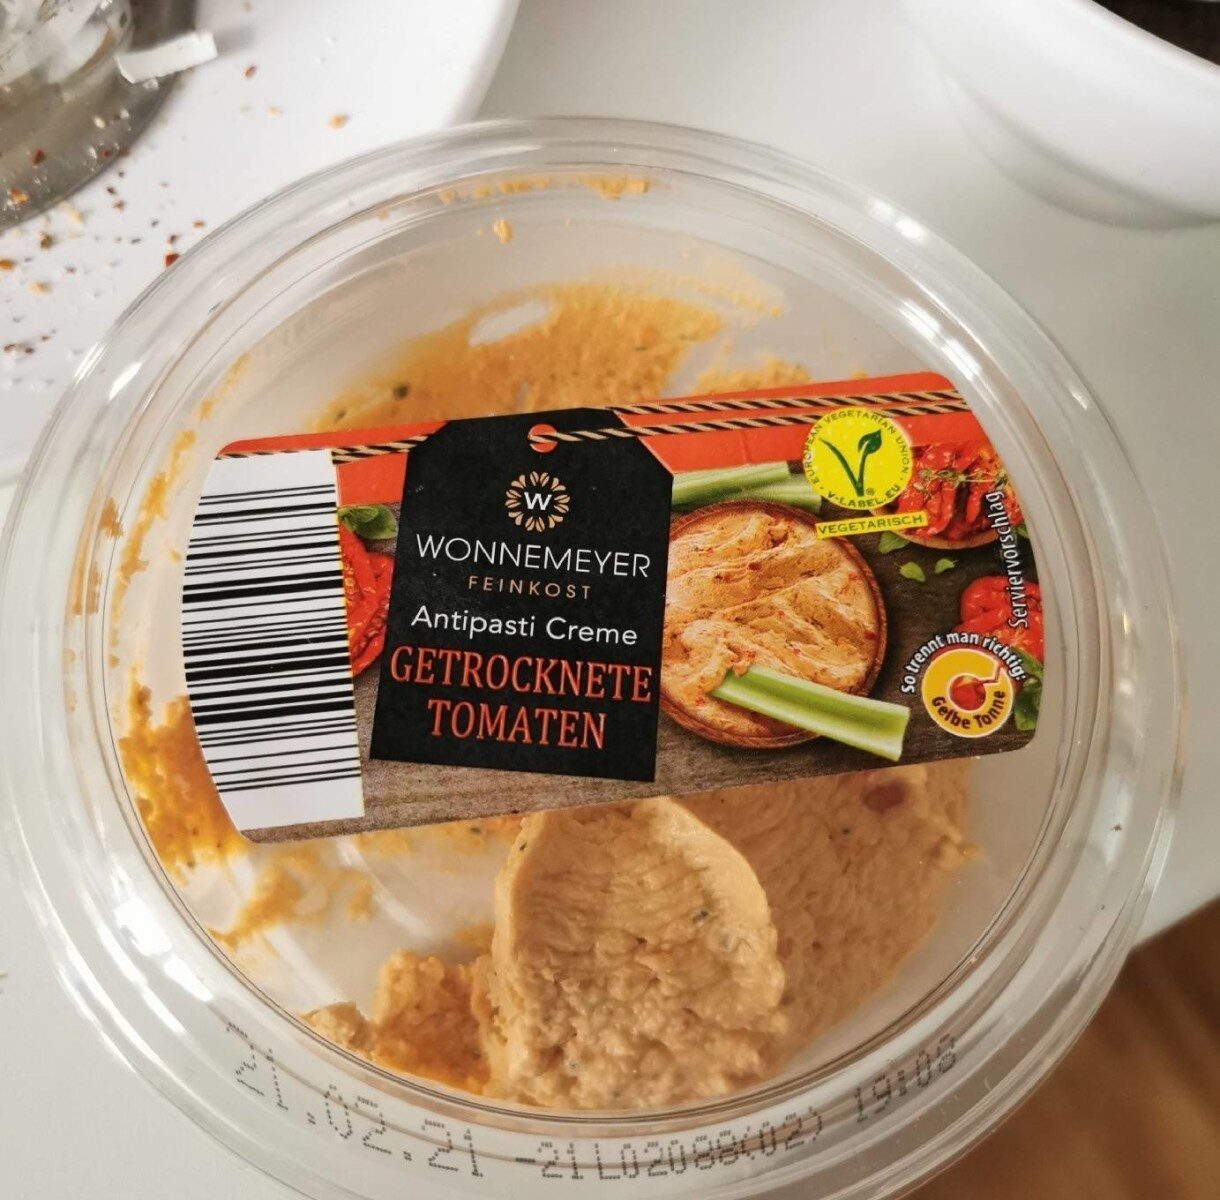 Antipasticreme - Getrocknete Tomaten - Product